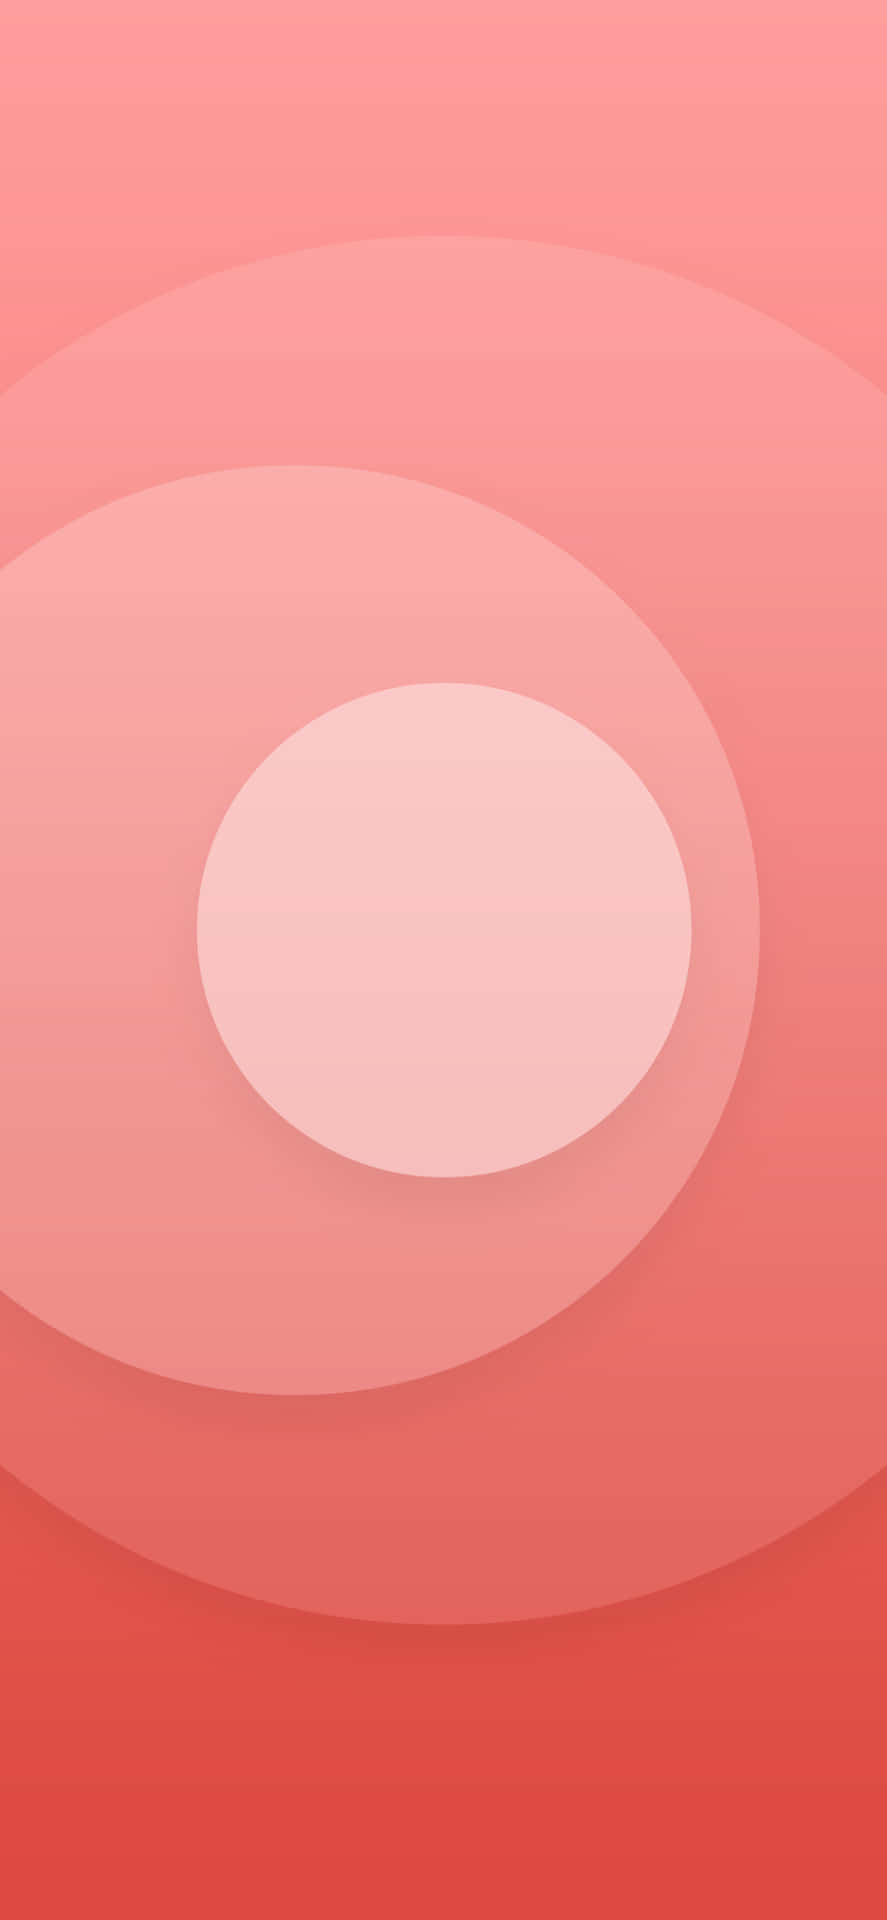 Download Pastel Red Background